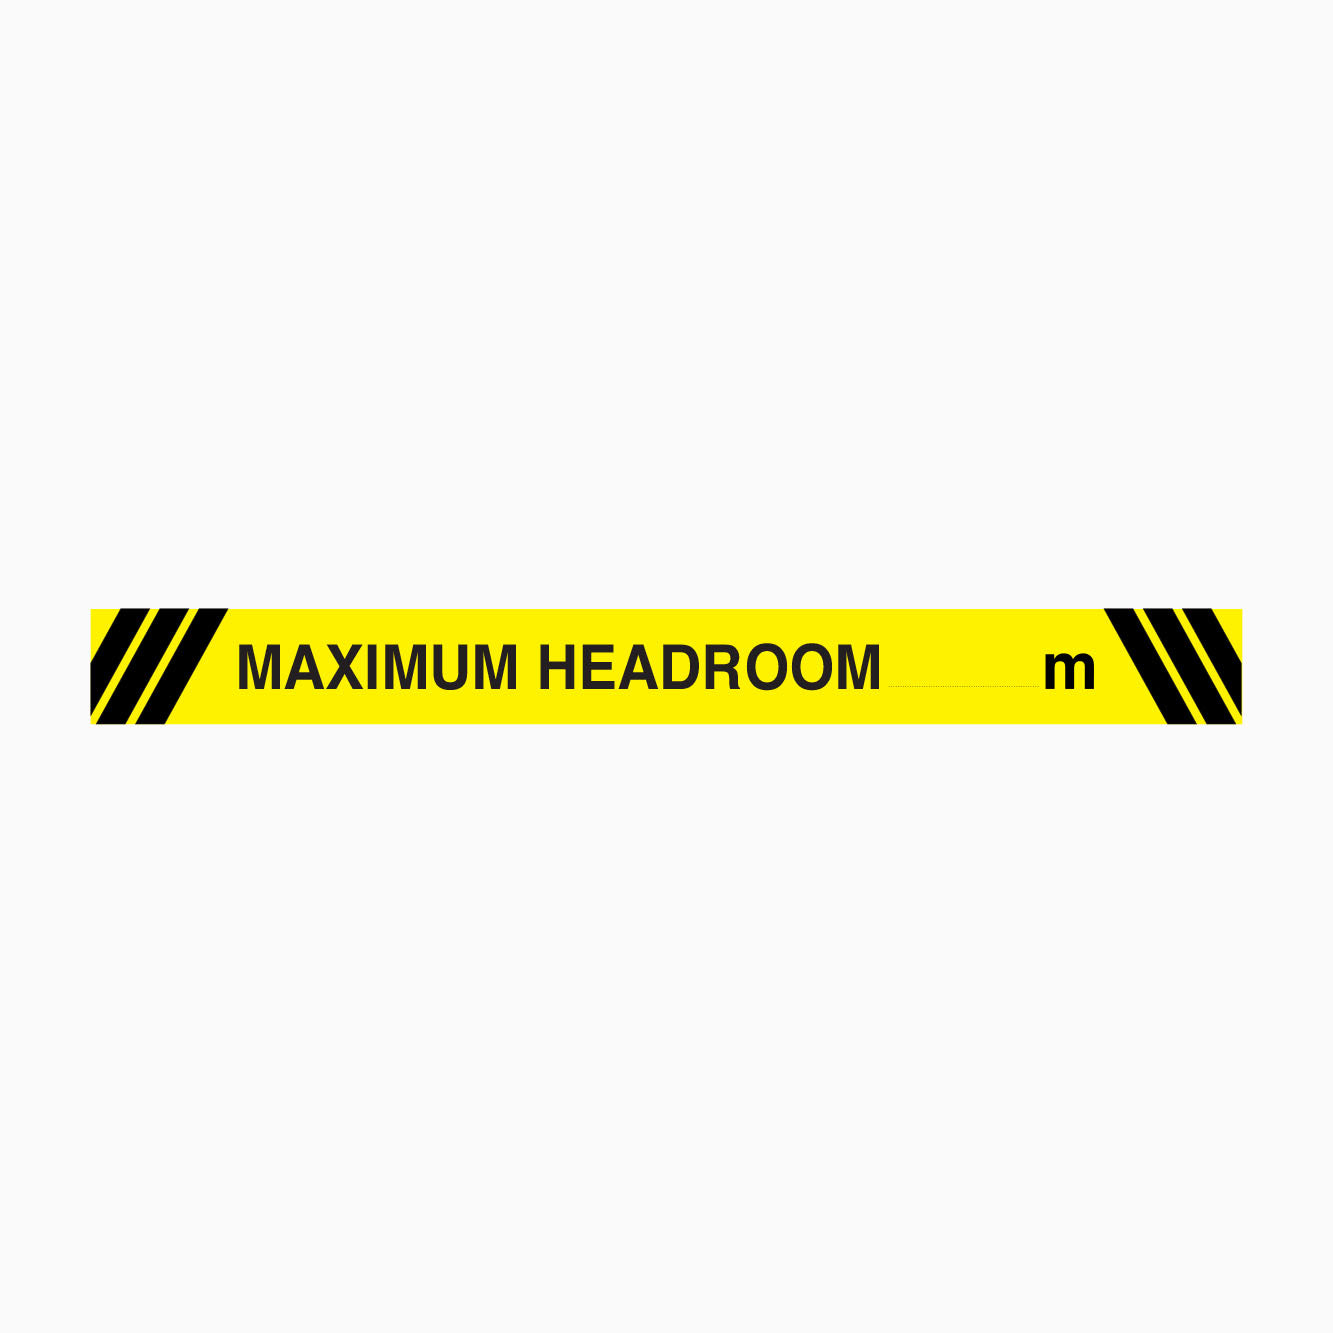 MAXIMUM HEADROOM SIGN CUSTOM HEIGH